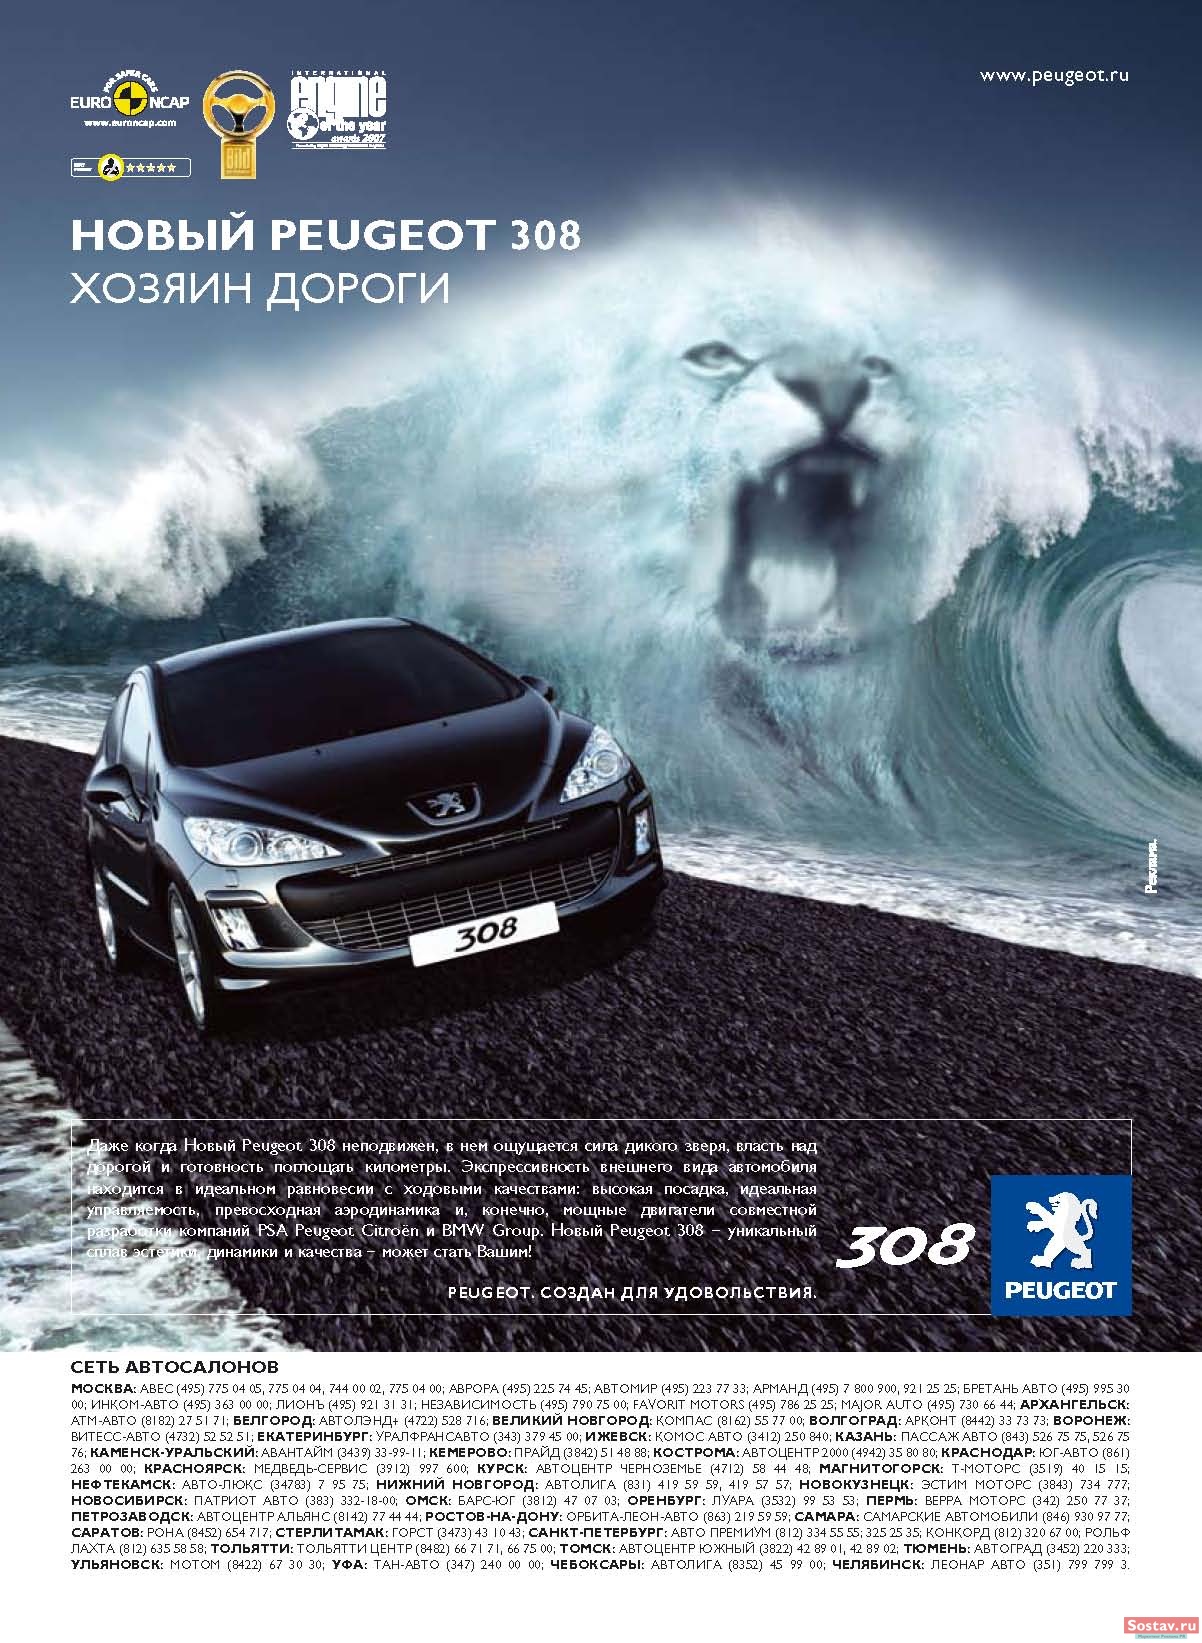 Реклама автомобилей слоганы. Пежо 308 реклама 2011. Peugeot 308 2010 реклама. Реклама автомобиля. Реклама на машине.